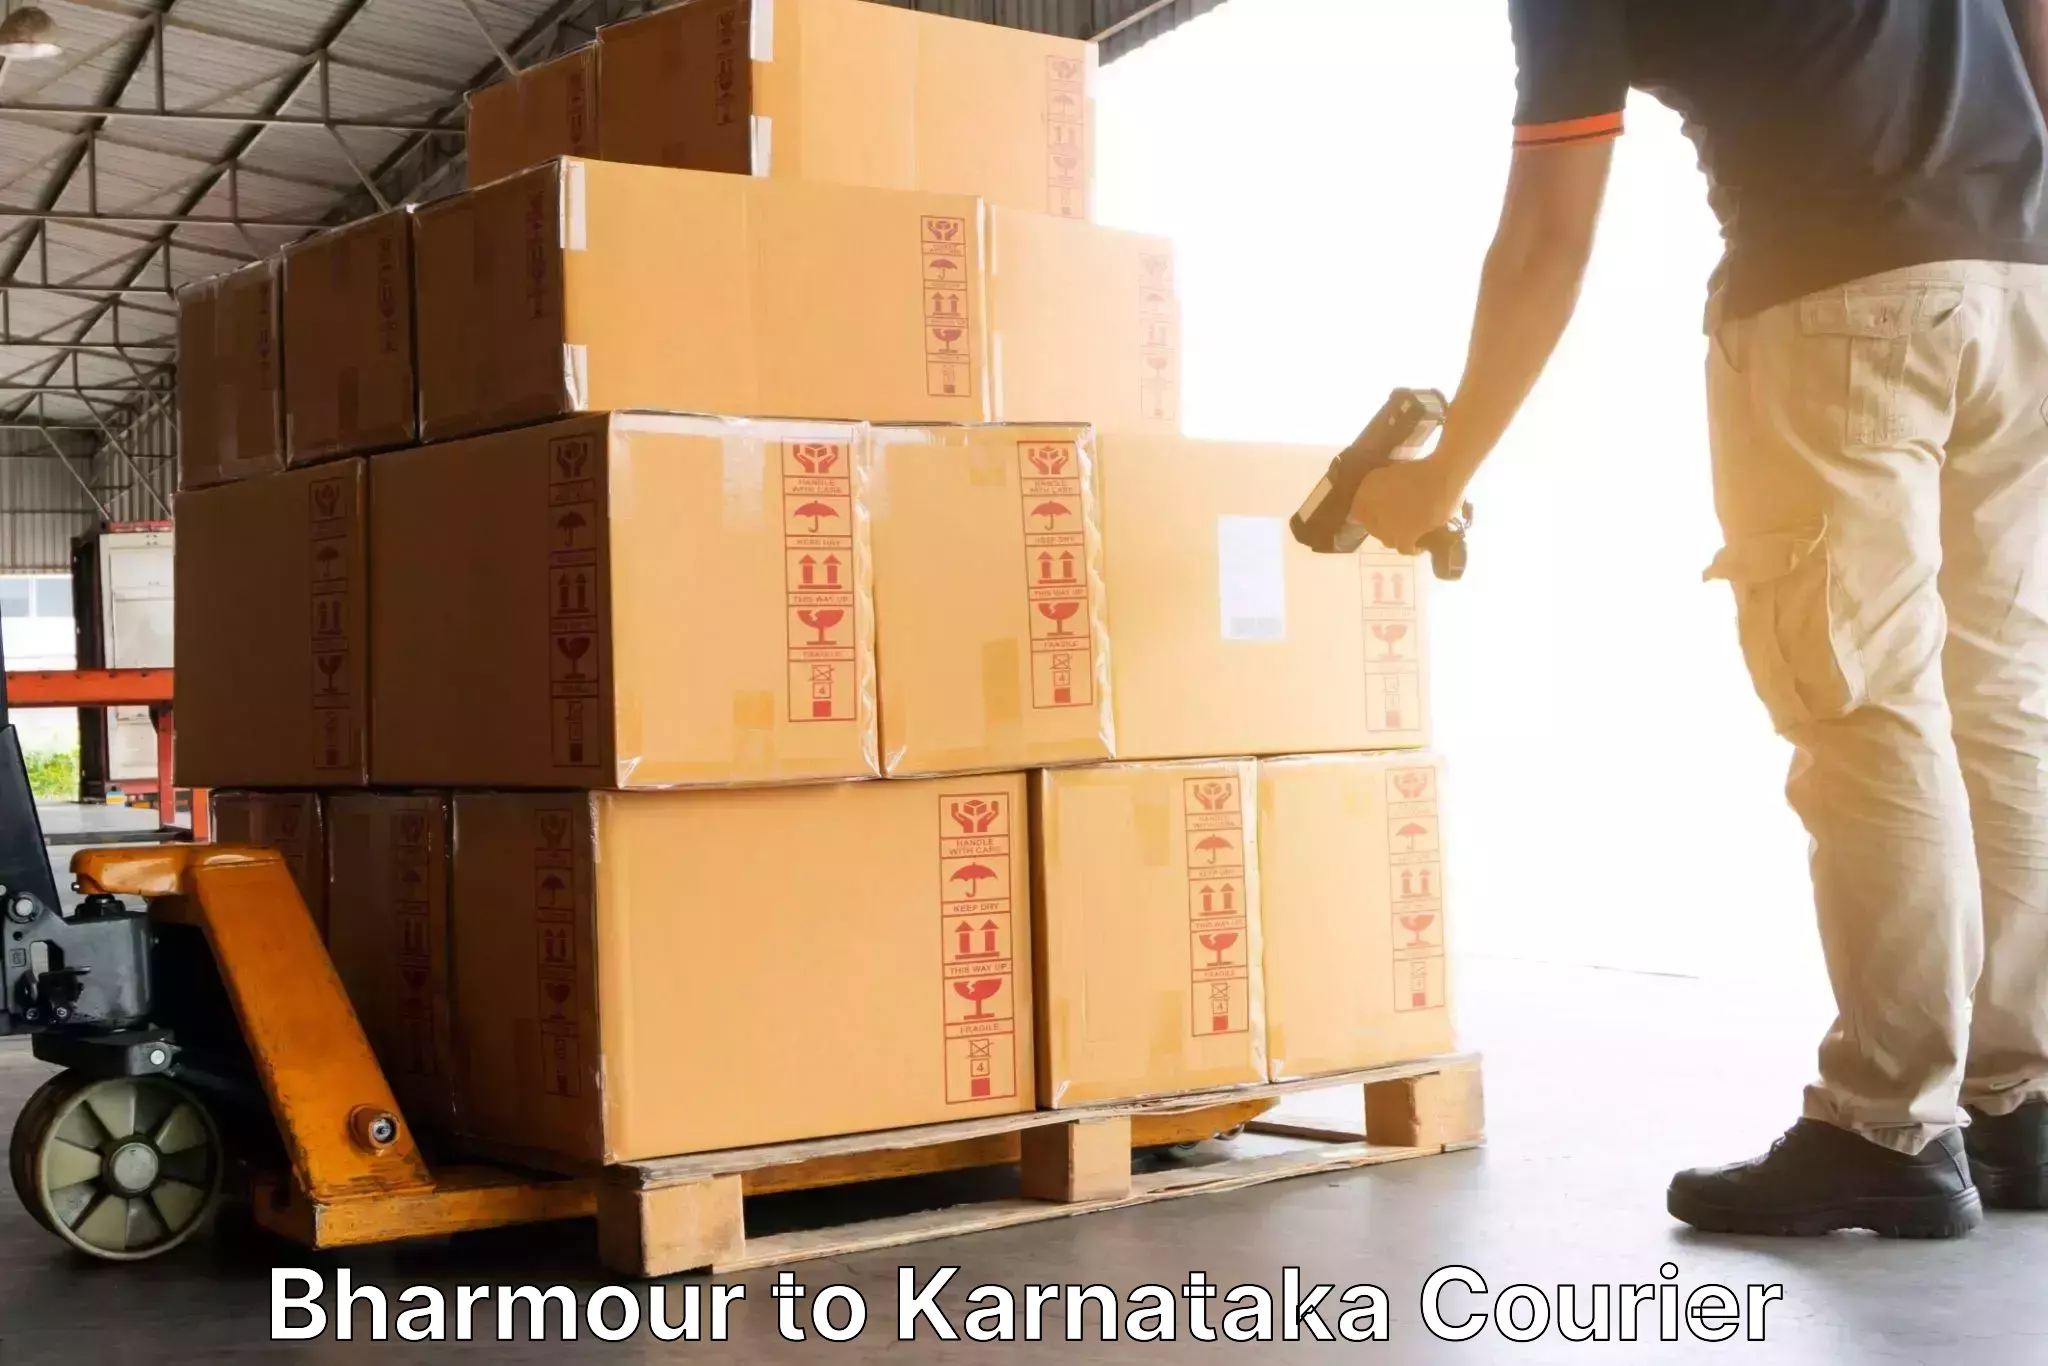 Customer-centric shipping Bharmour to Karnataka